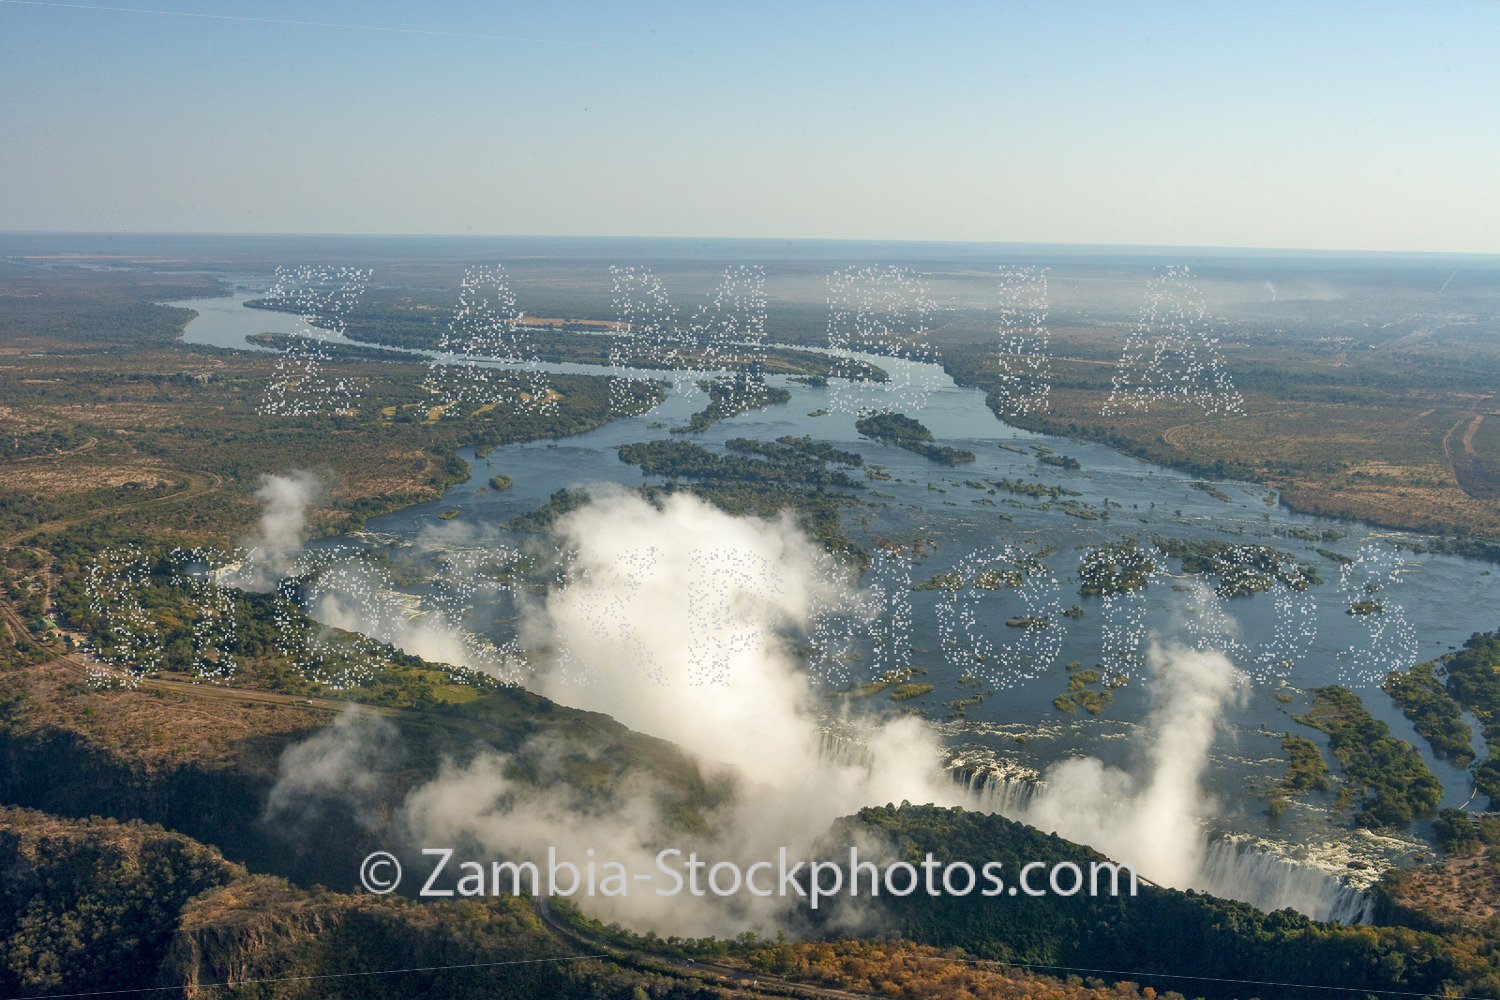 Victoria Falls.jpg - Zamstockphotos.com